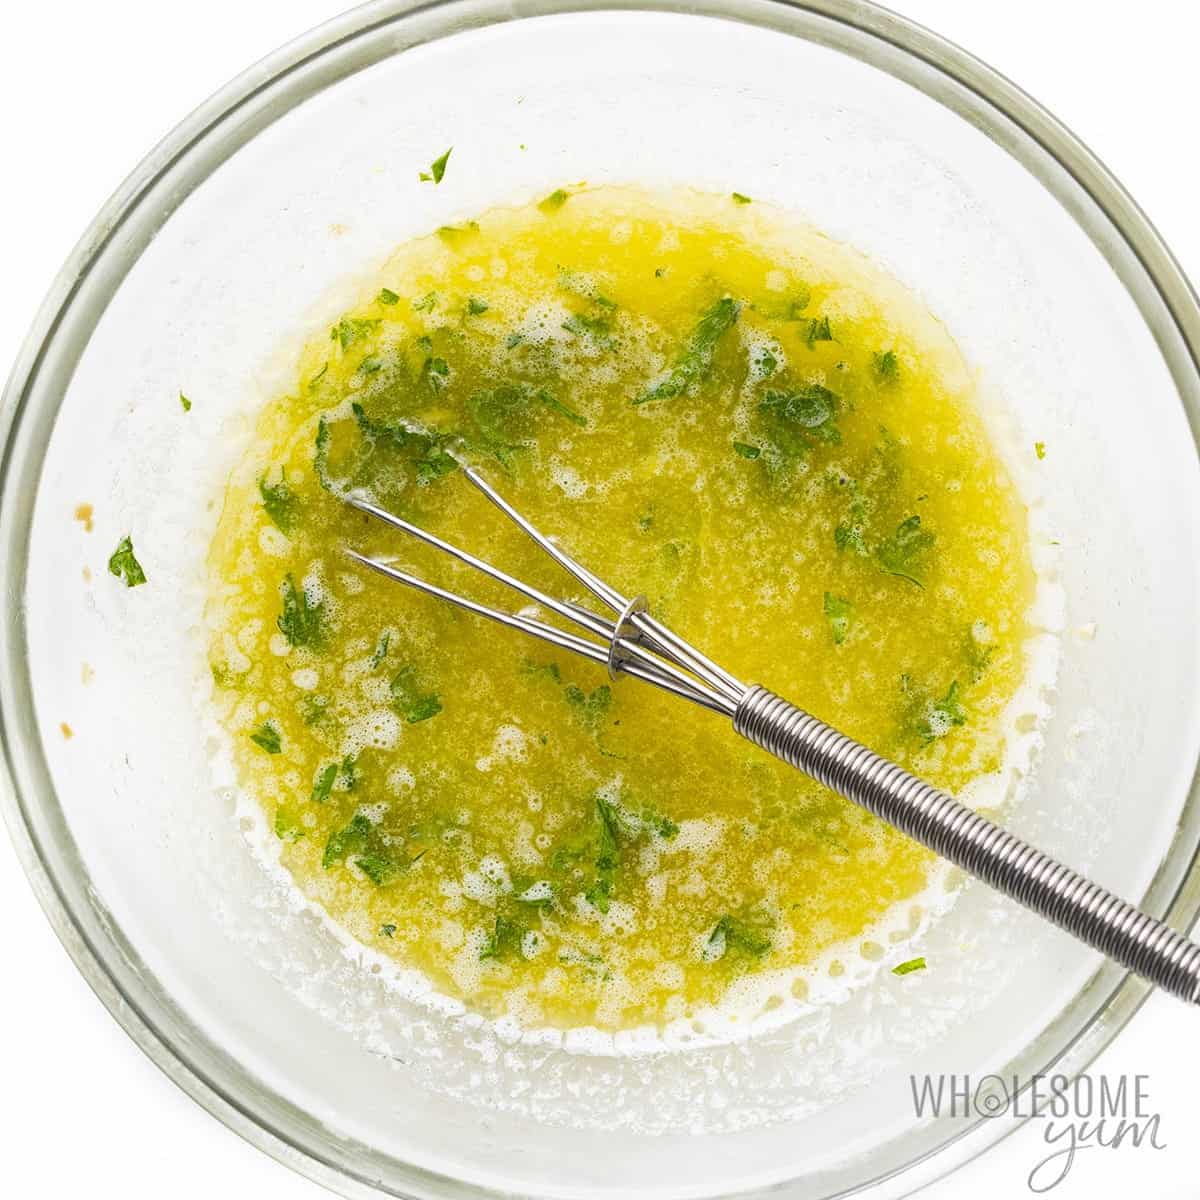 Lemon butter sauce in a glass bowl.